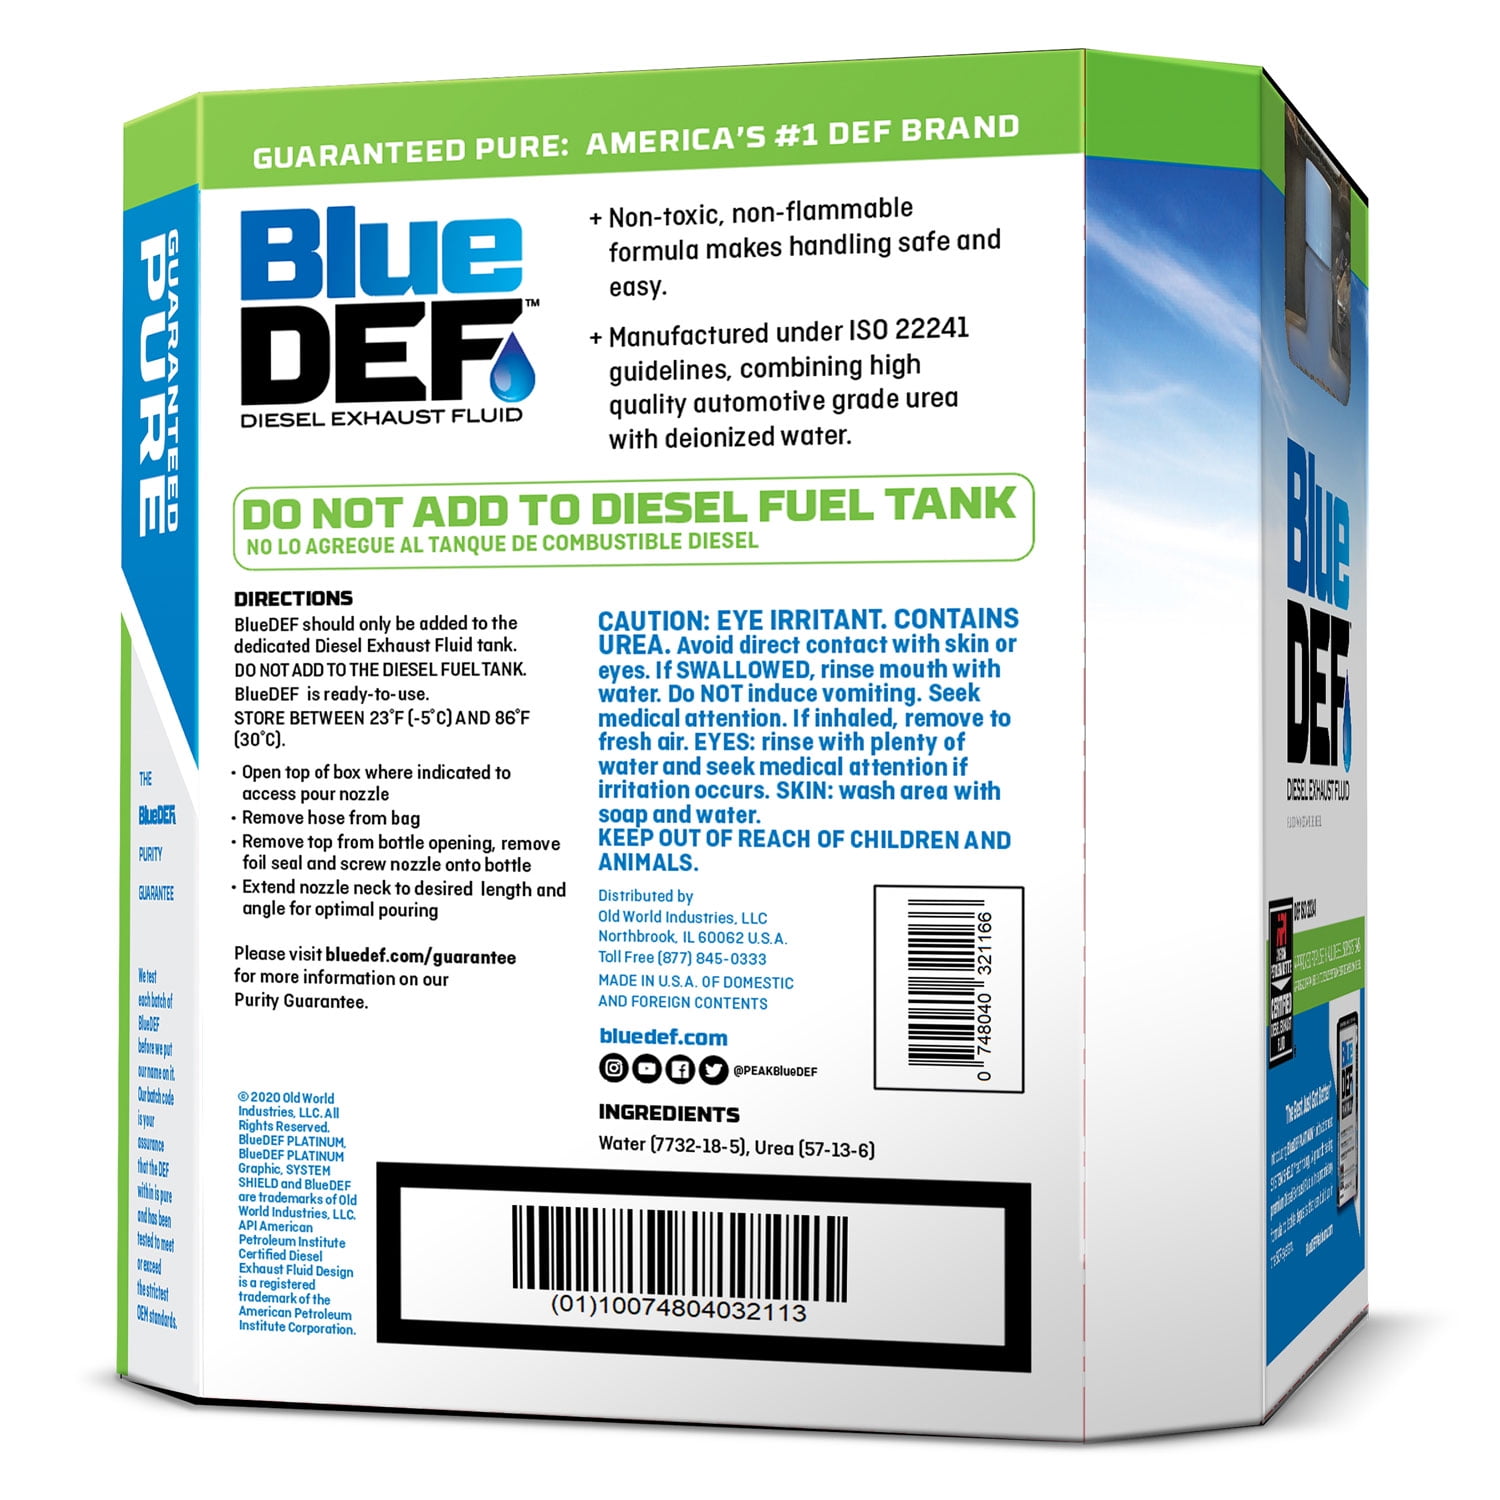 BlueDEF Diesel Exhaust Fluid Synthetic Urea Deionized Water 2.5 Gallon 4 Pack 